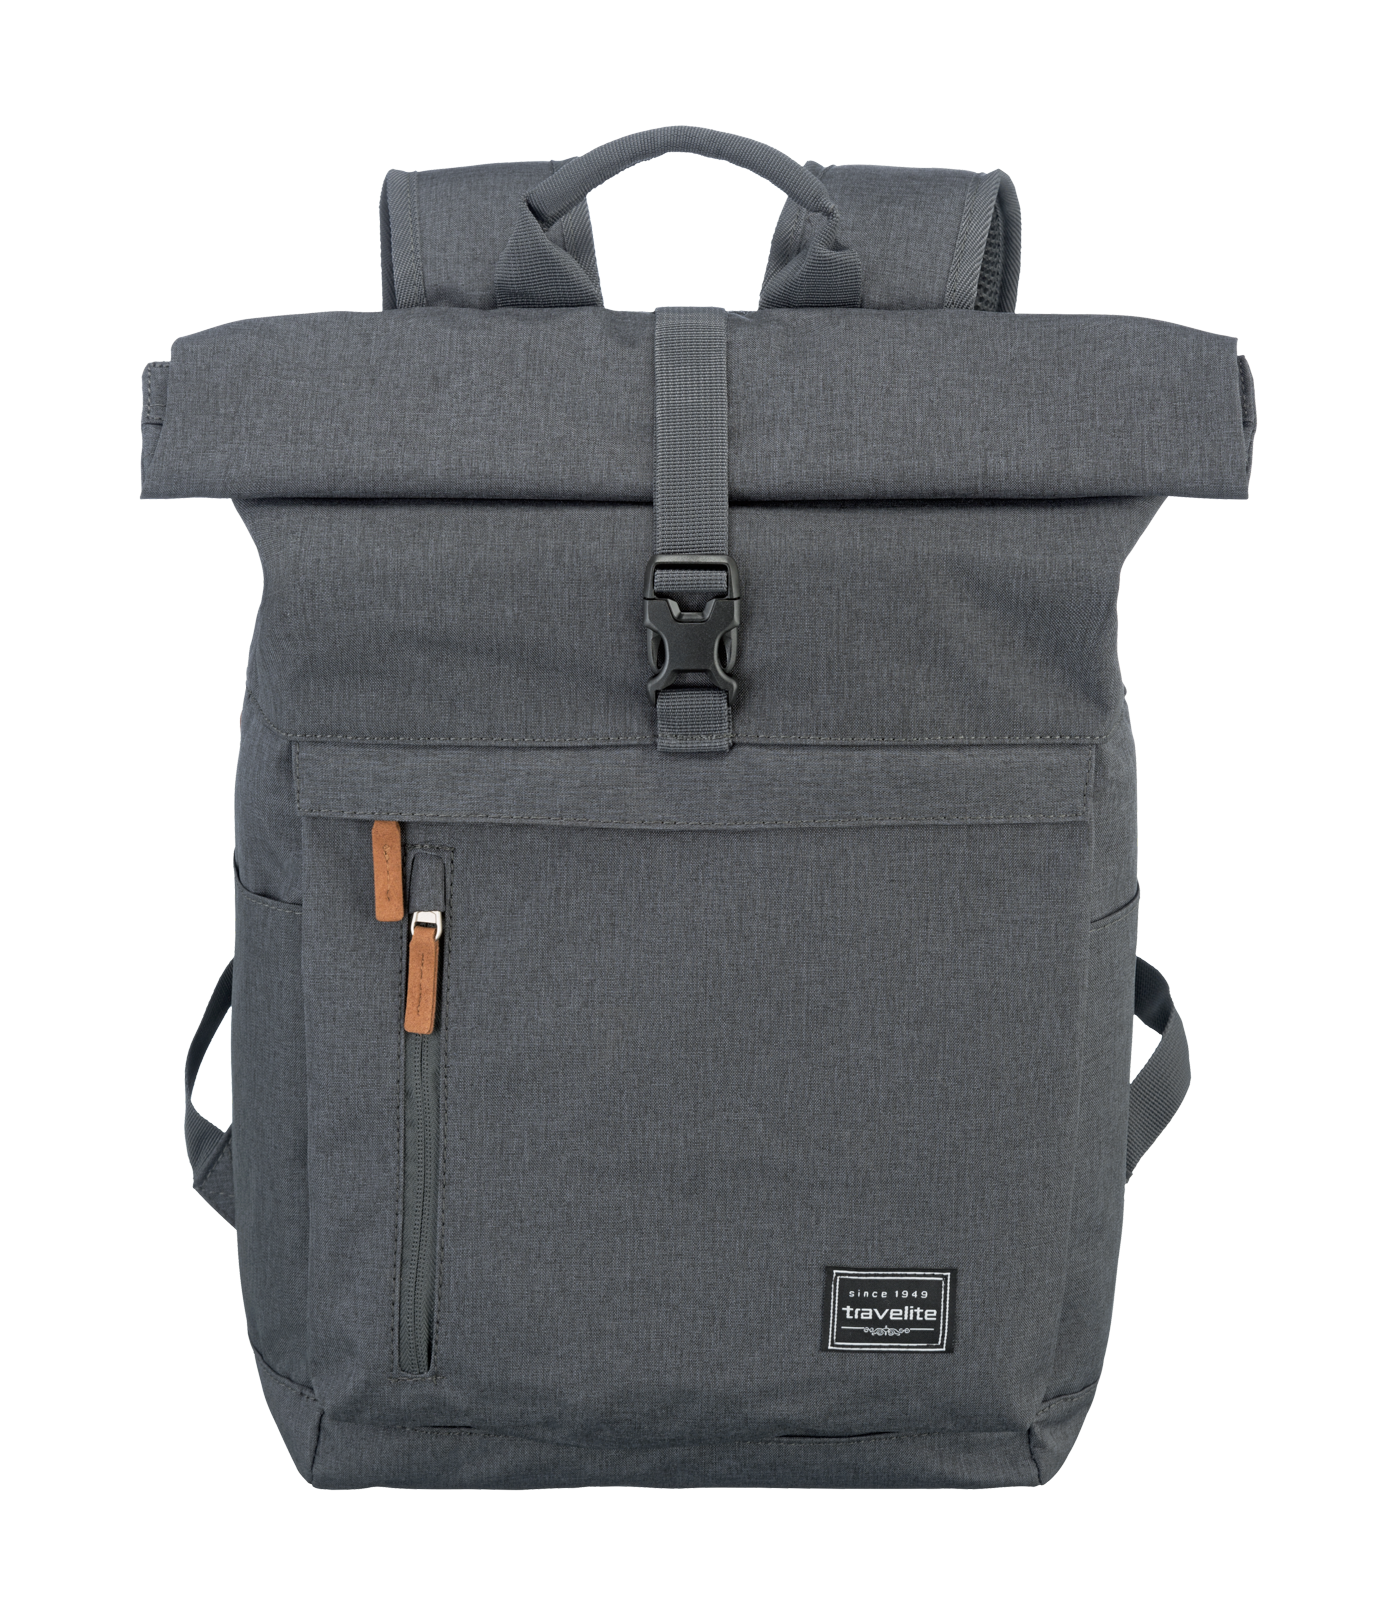 rollup backpack(officine federali )